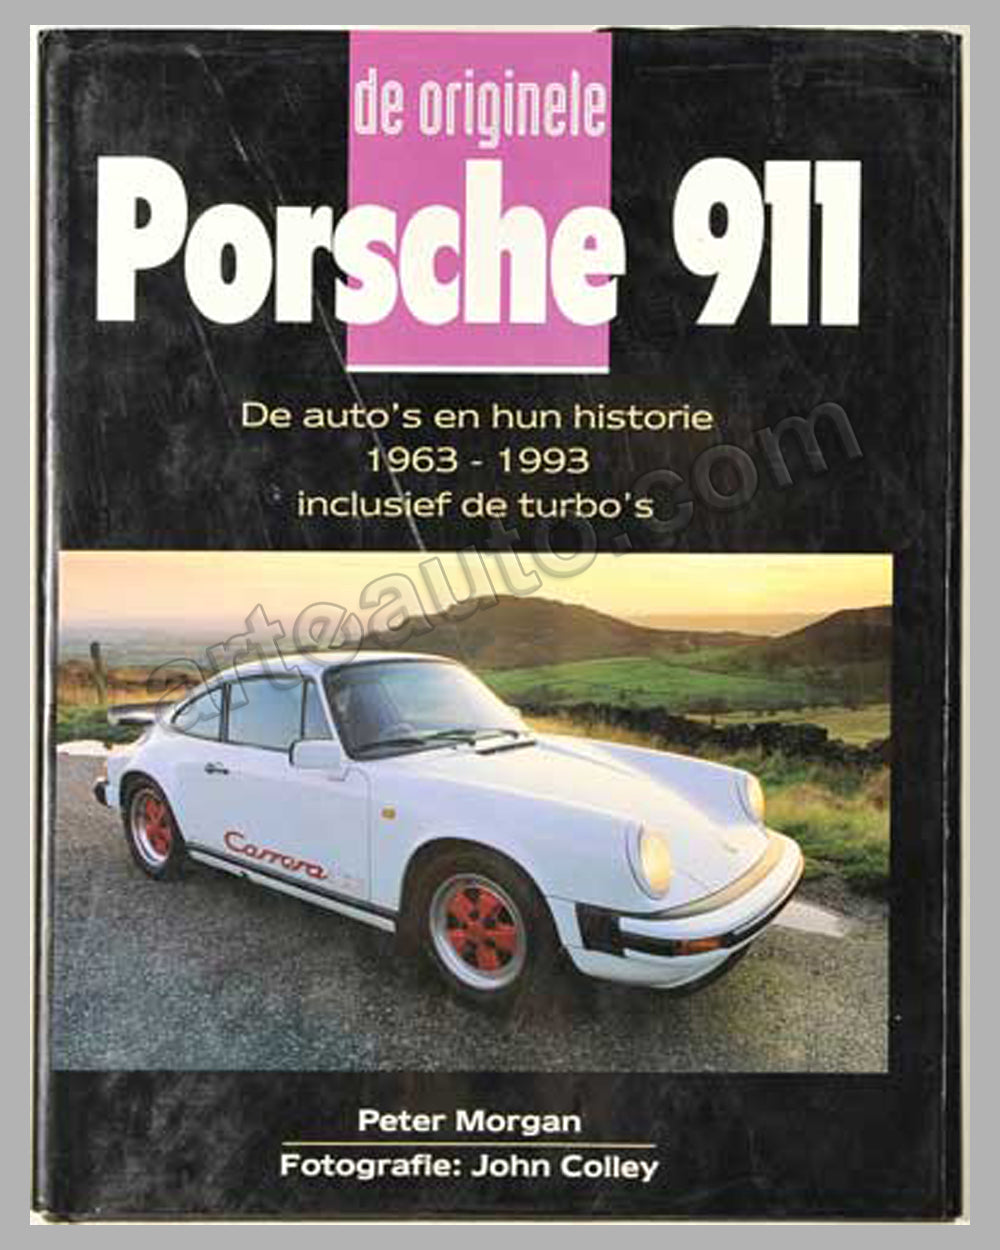 de Originele Porsche 911 book by P. Morgan, 1995